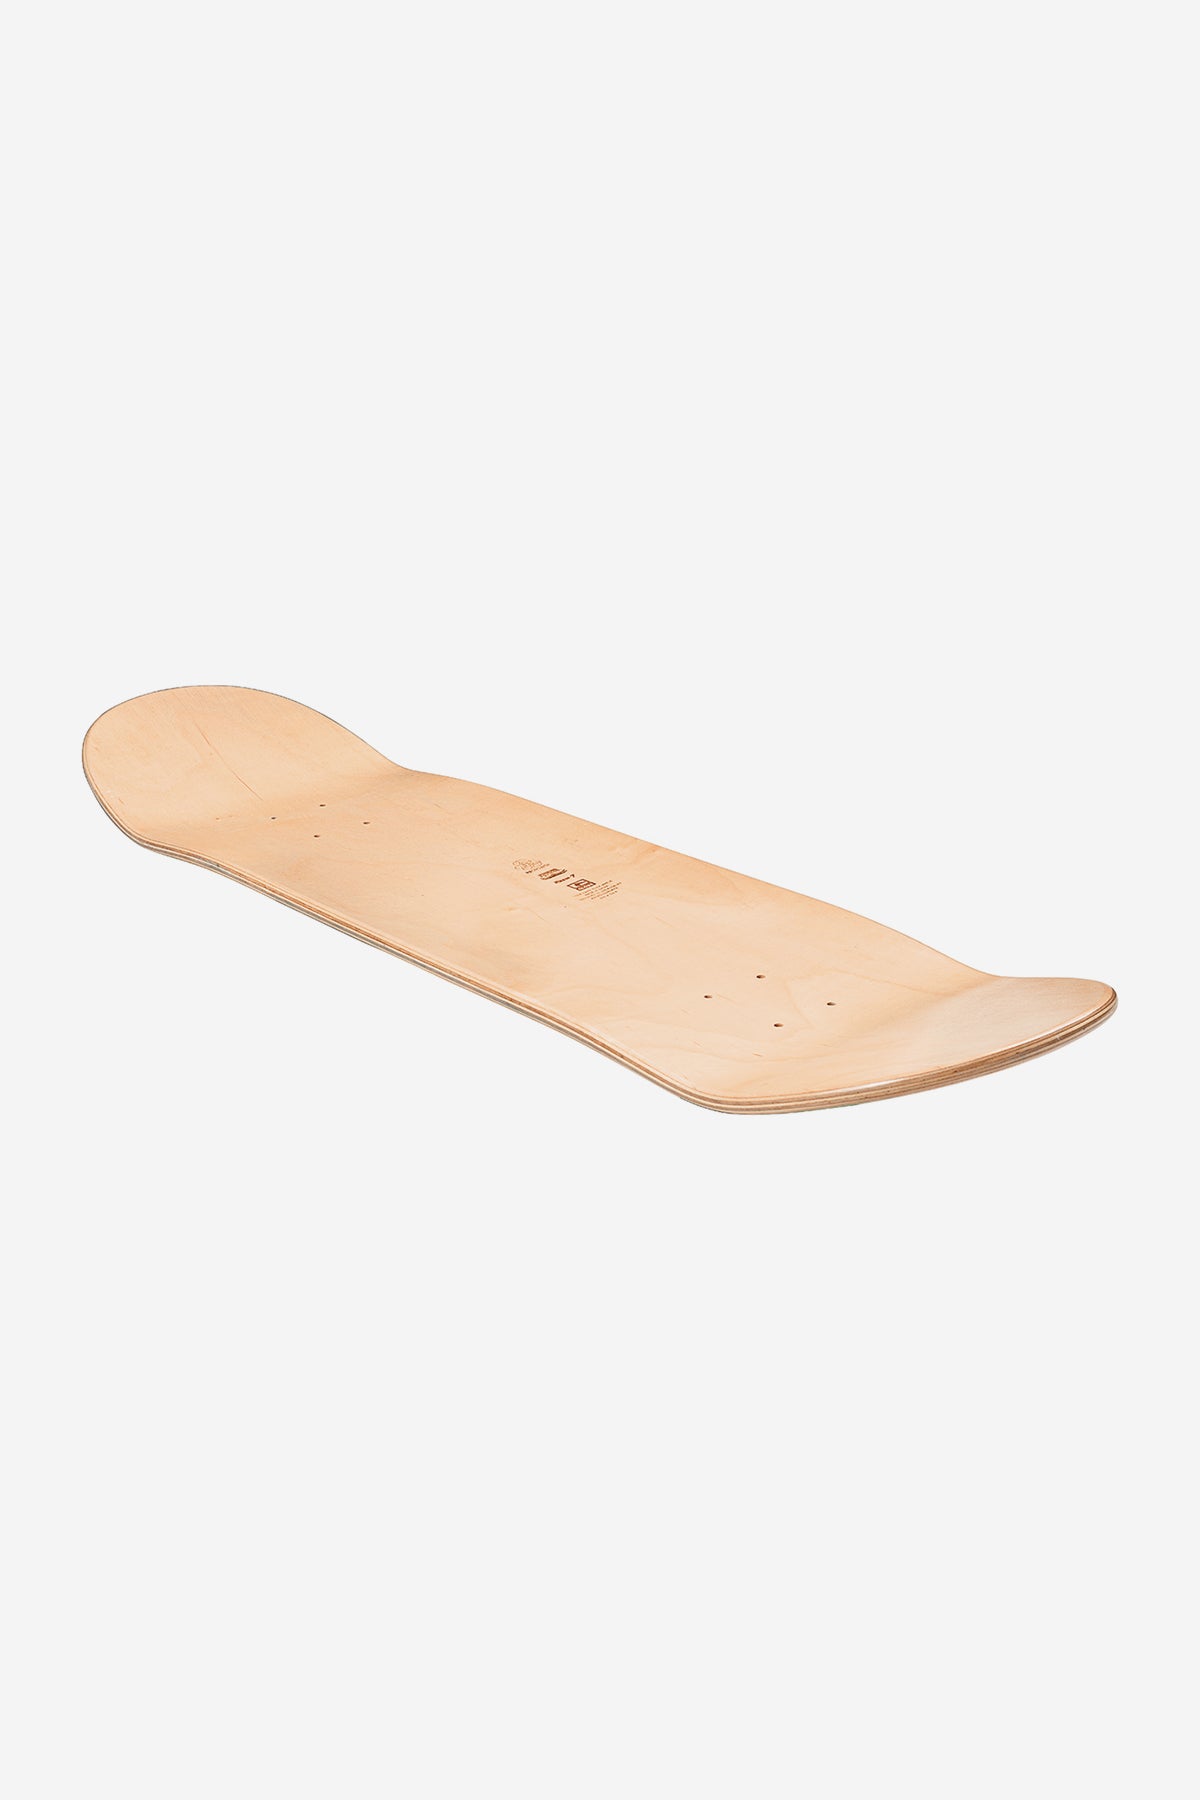 Globe - Goodstock - Sahara - 8,375" Skateboard Deck